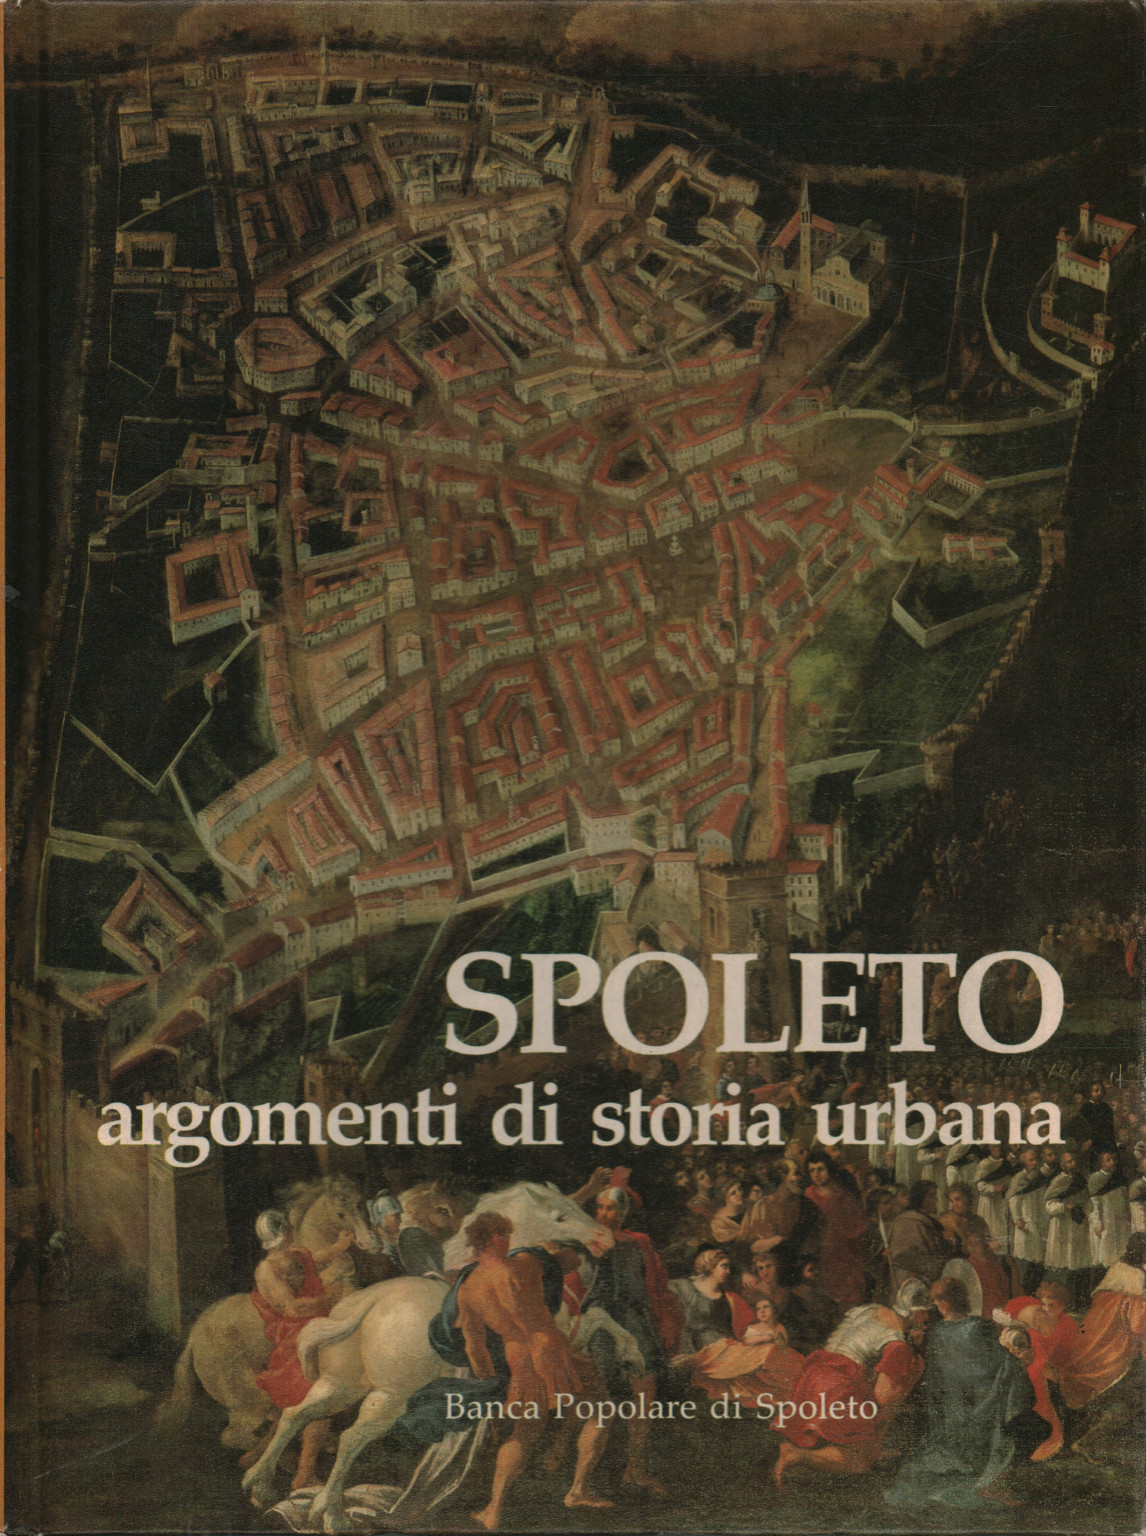 Spoleto topics of urban history, Guglielmo De Angelis d'Ossat Bruno Toscano